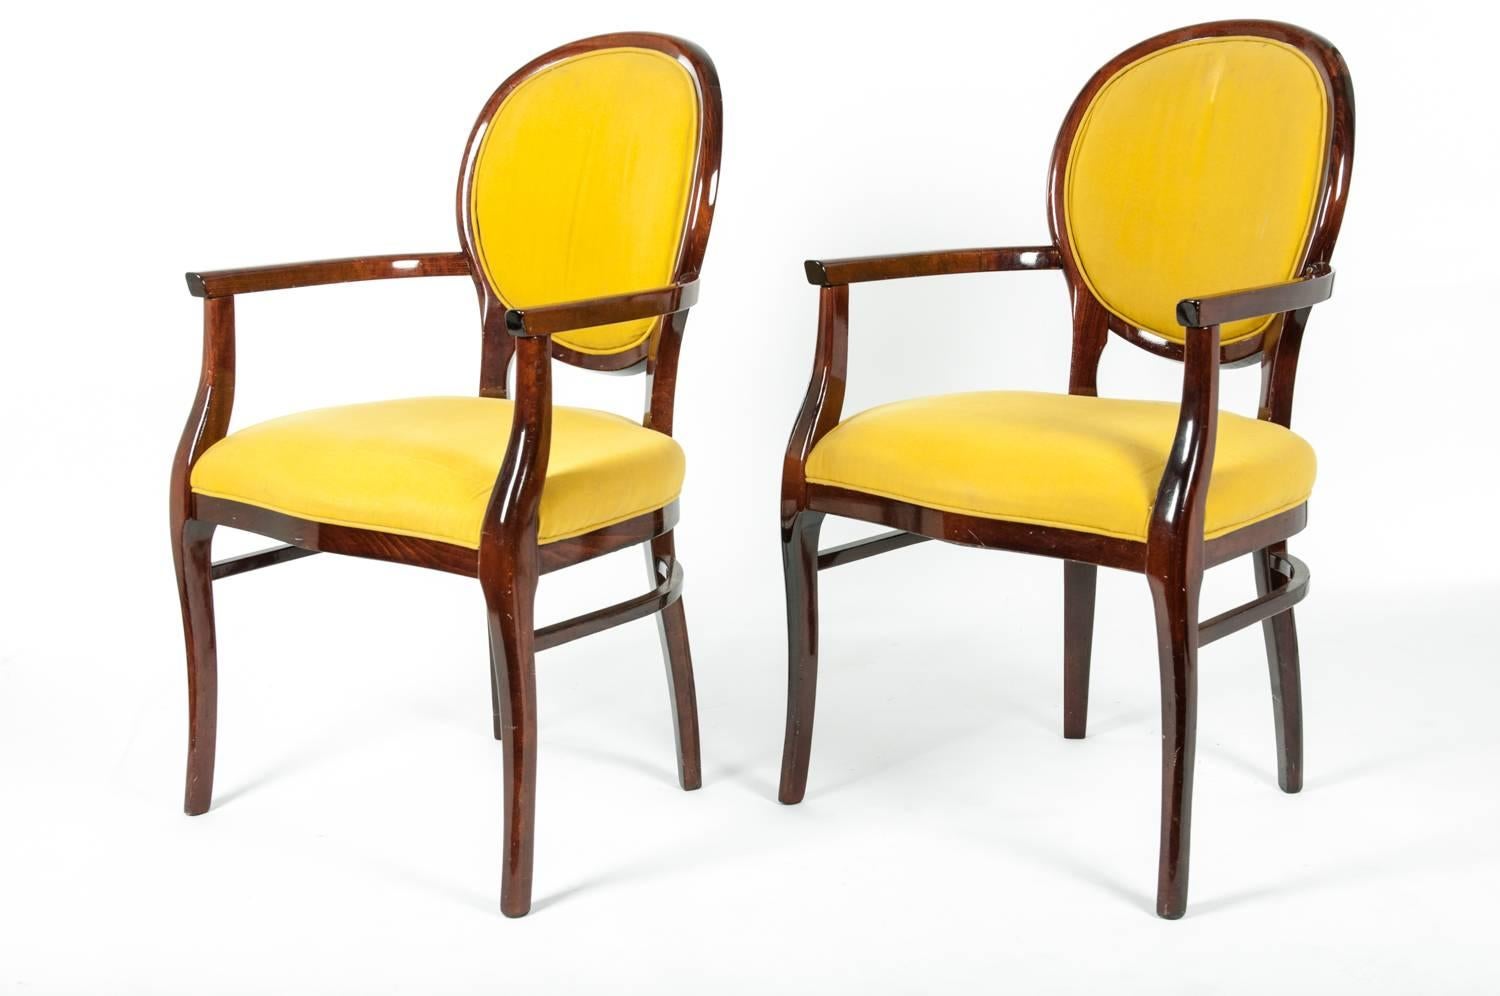 European Mid-Century Modern Art Deco, Pair of Chairs